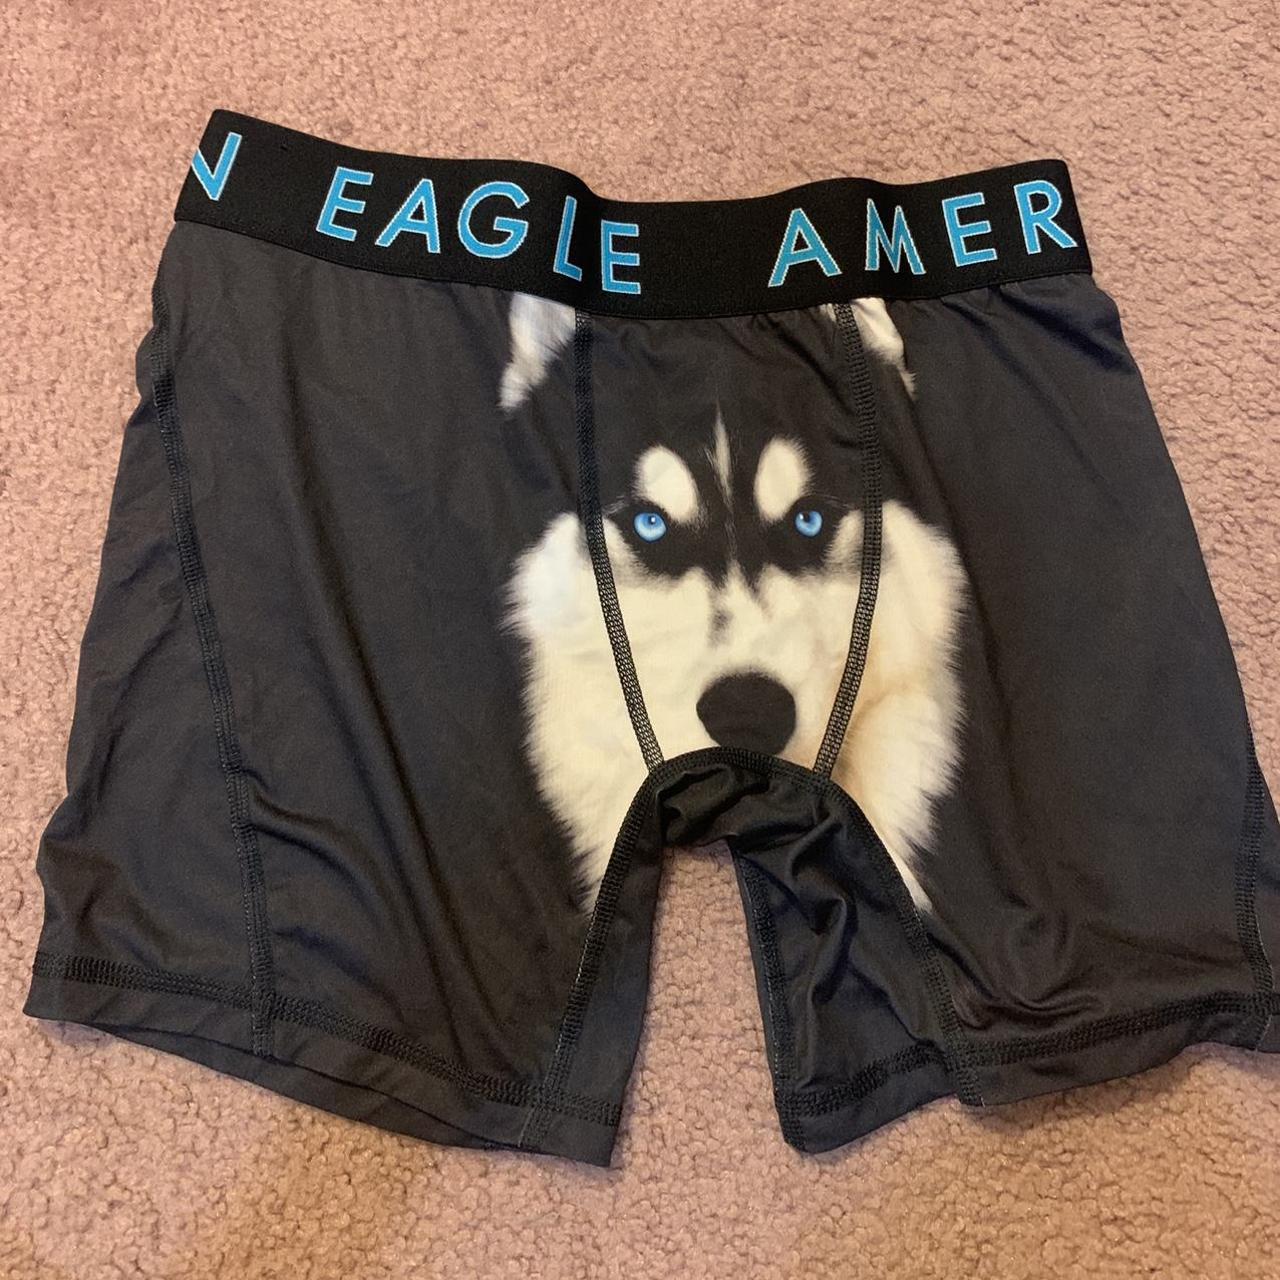 American Eagle * Underwear/ Briefs Wolf Print Free - Depop